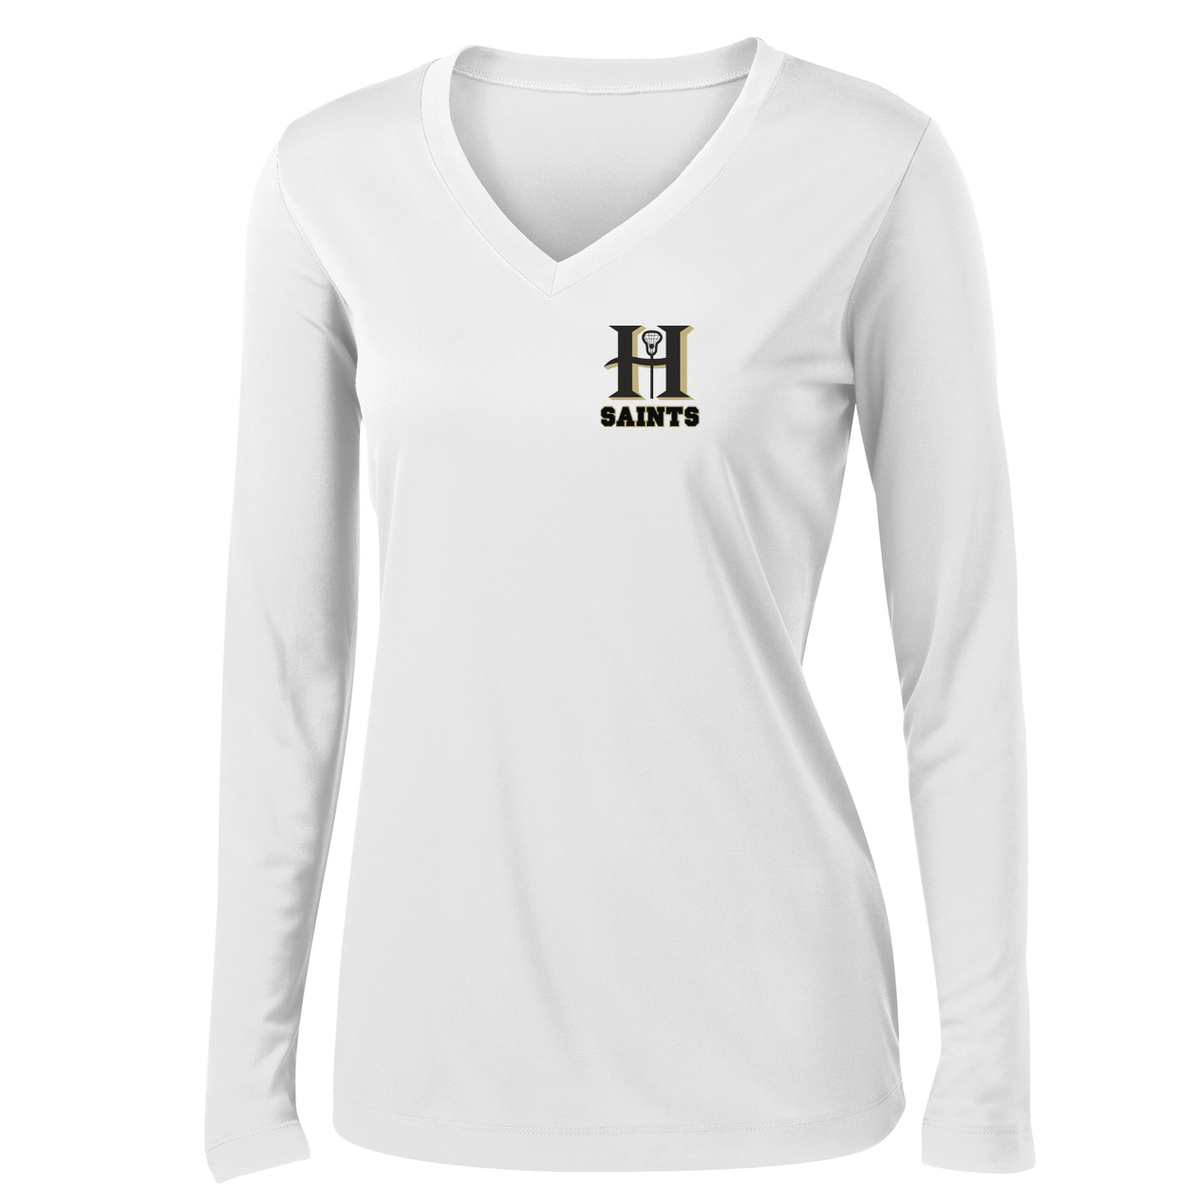 HAYLA Saints Women's White Long Sleeve Performance Shirt